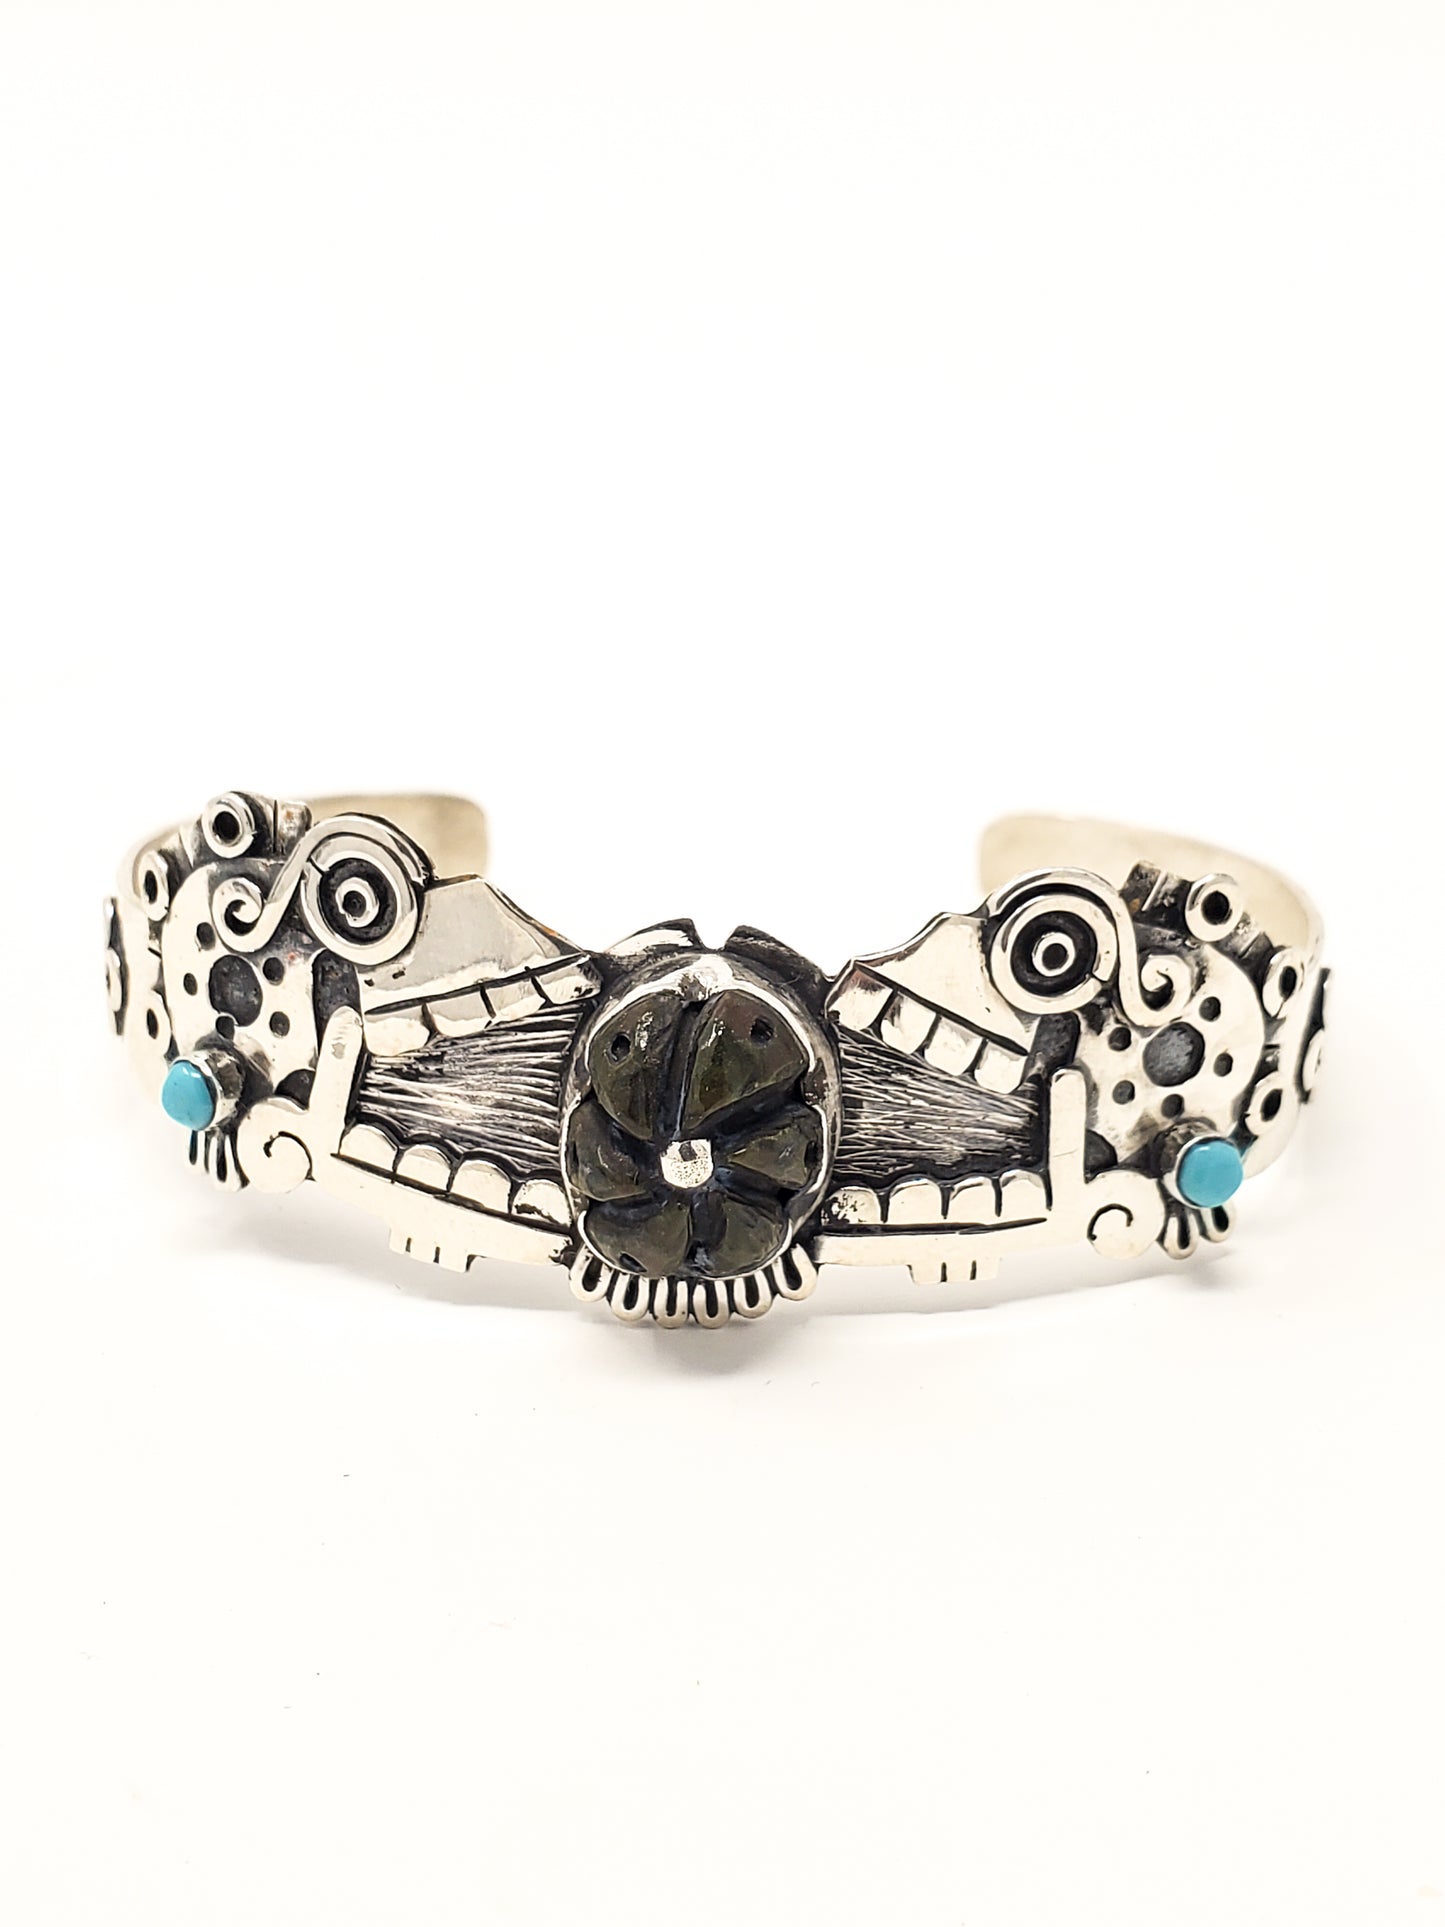 Miquiztli (Skulls) Peyote Silver Bracelet